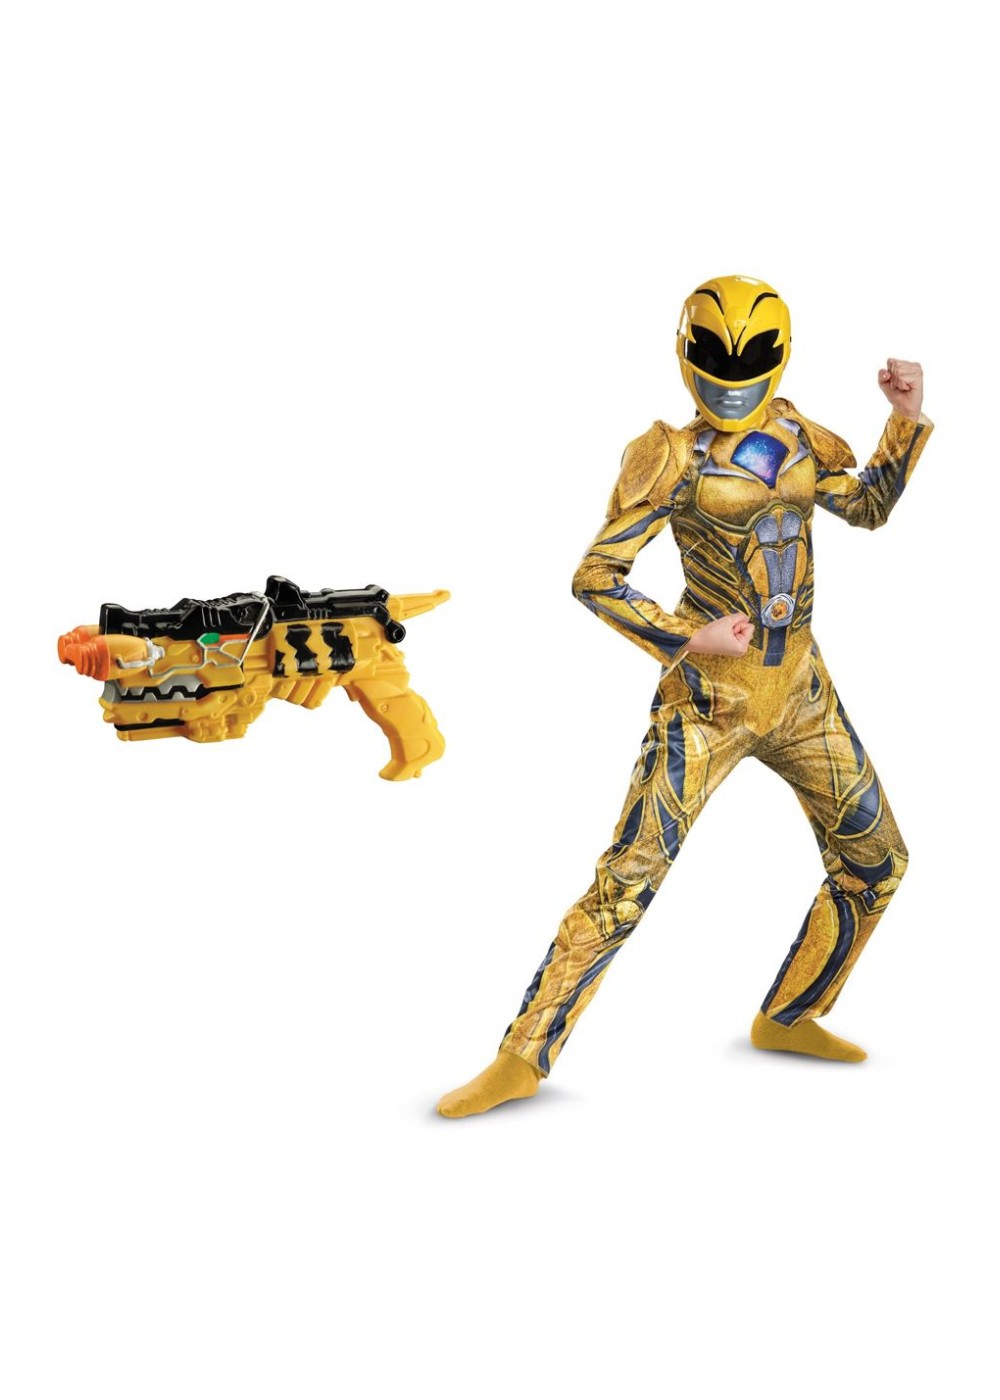 power rangers dino thunder yellow ranger costume